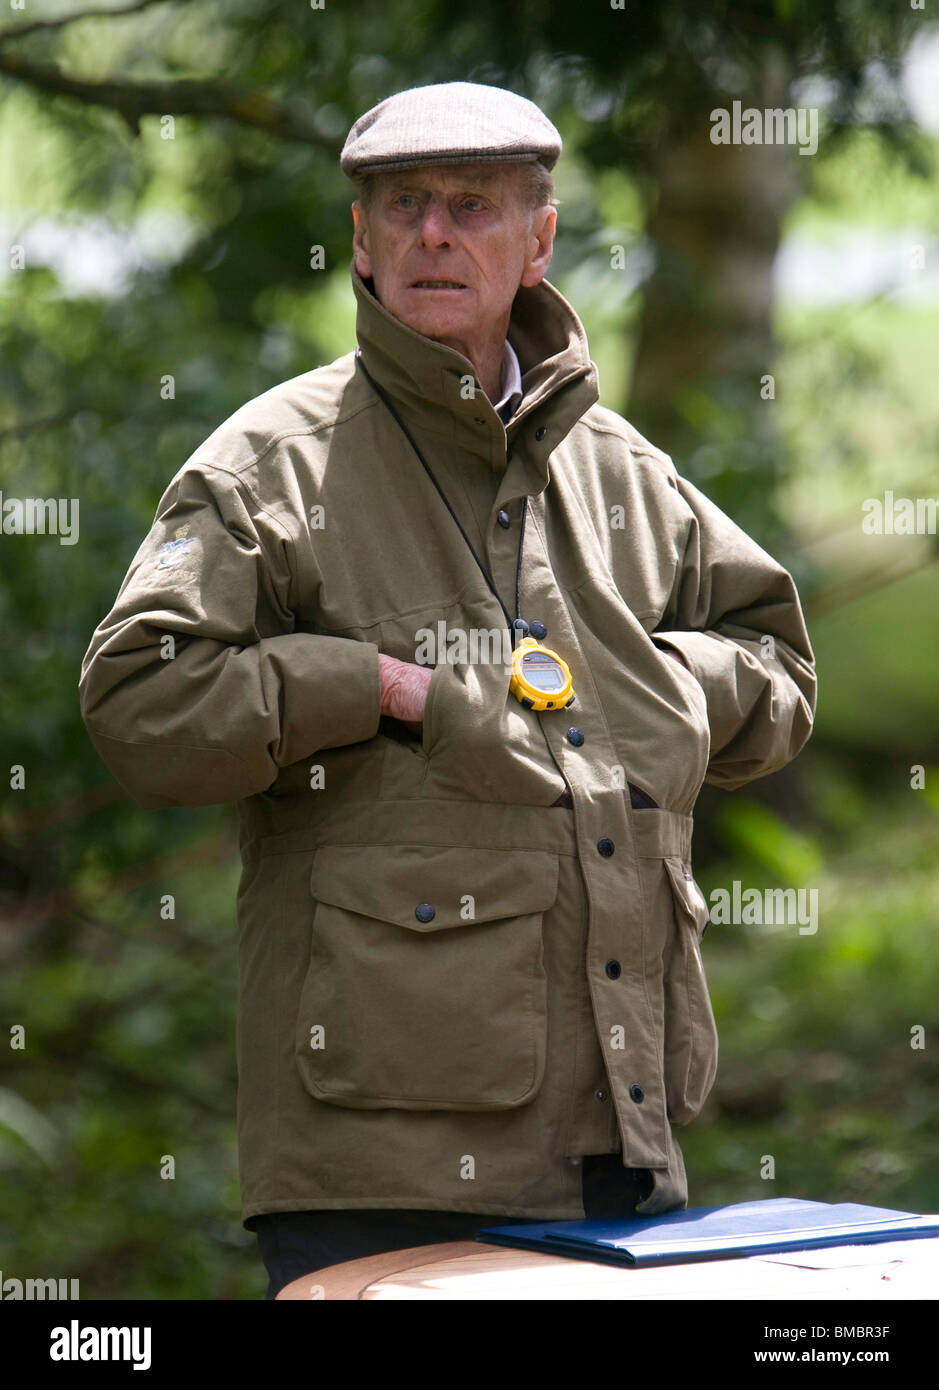 Britain's Prince Philip, the Duke of Edinburgh wearing a flat cap at the Rpyal Windsor Horse Show Stock Photo